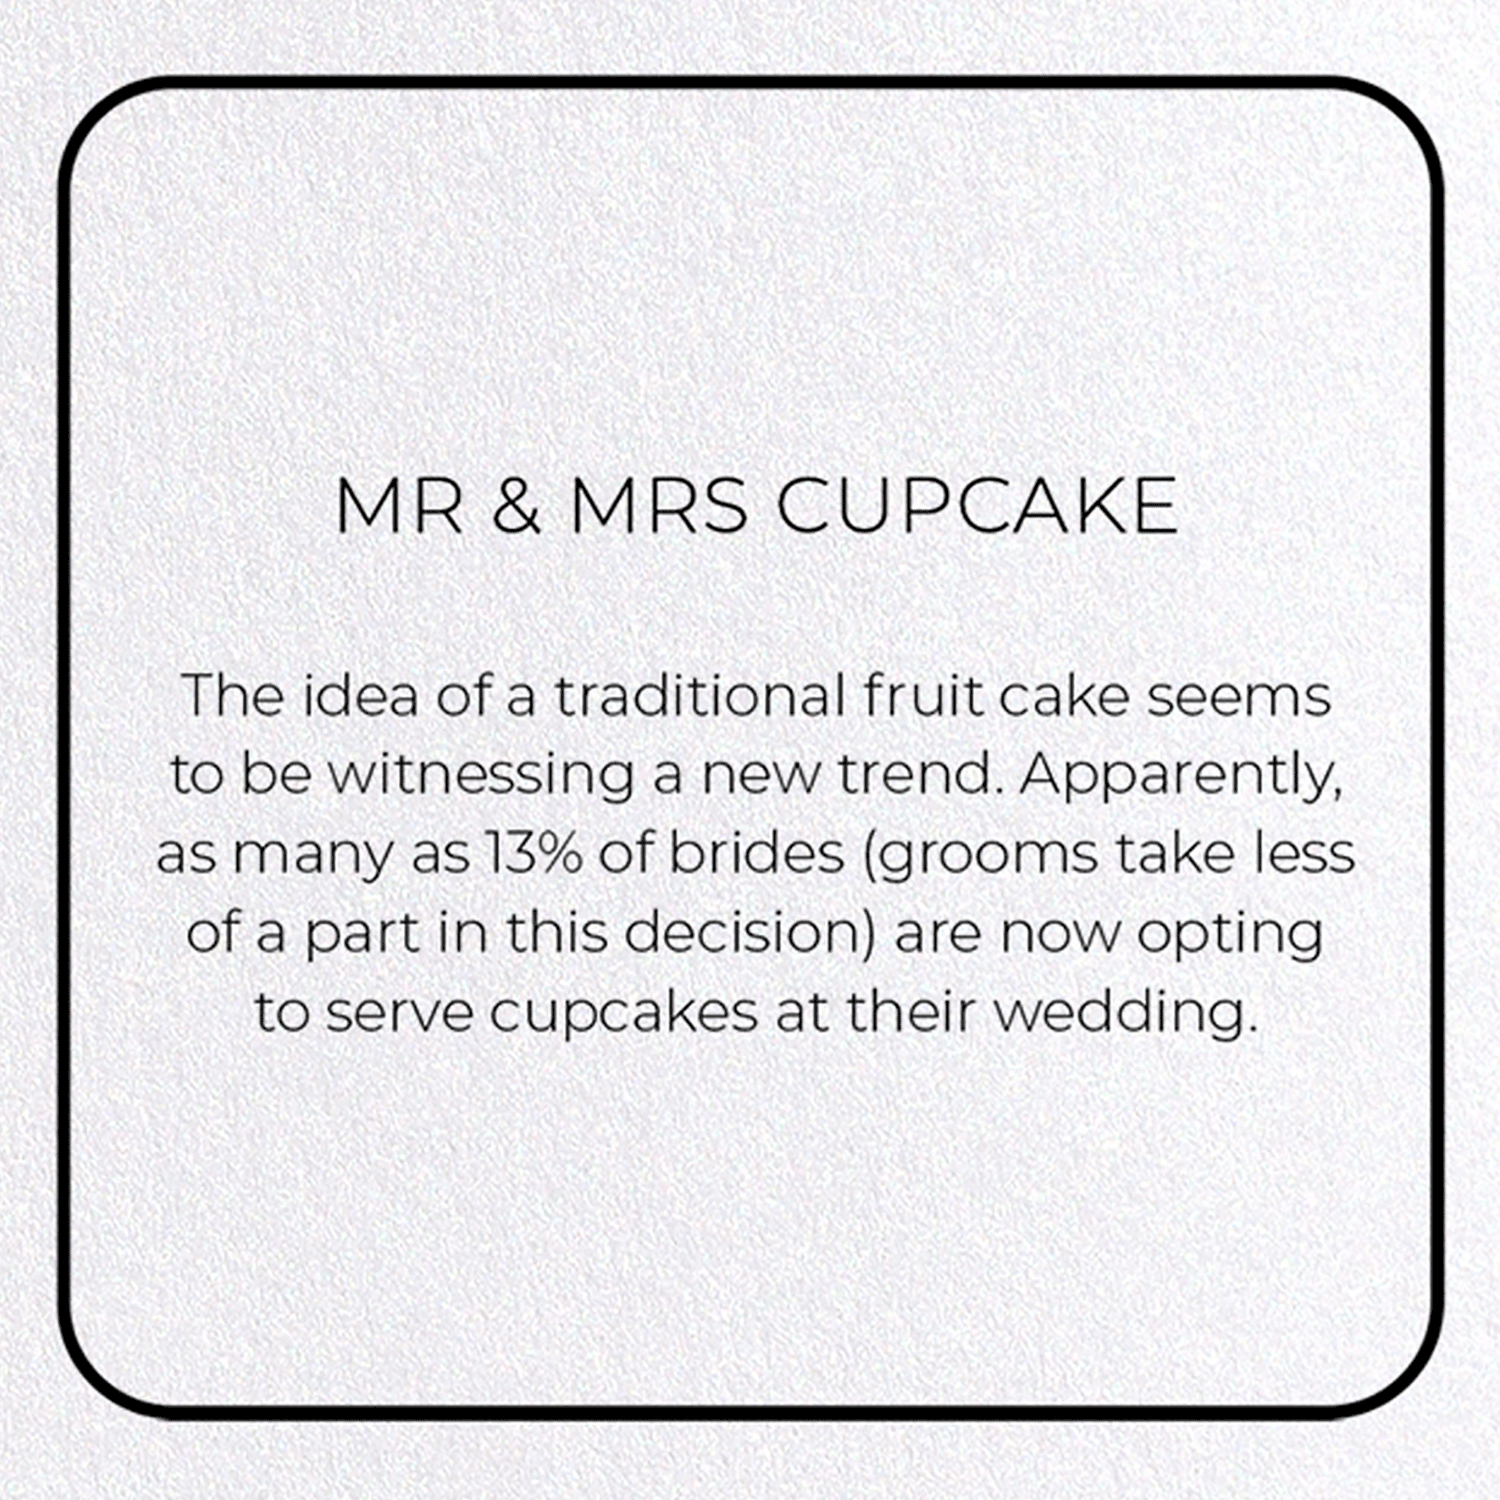 MR & MRS CUPCAKE: Photo Greeting Card